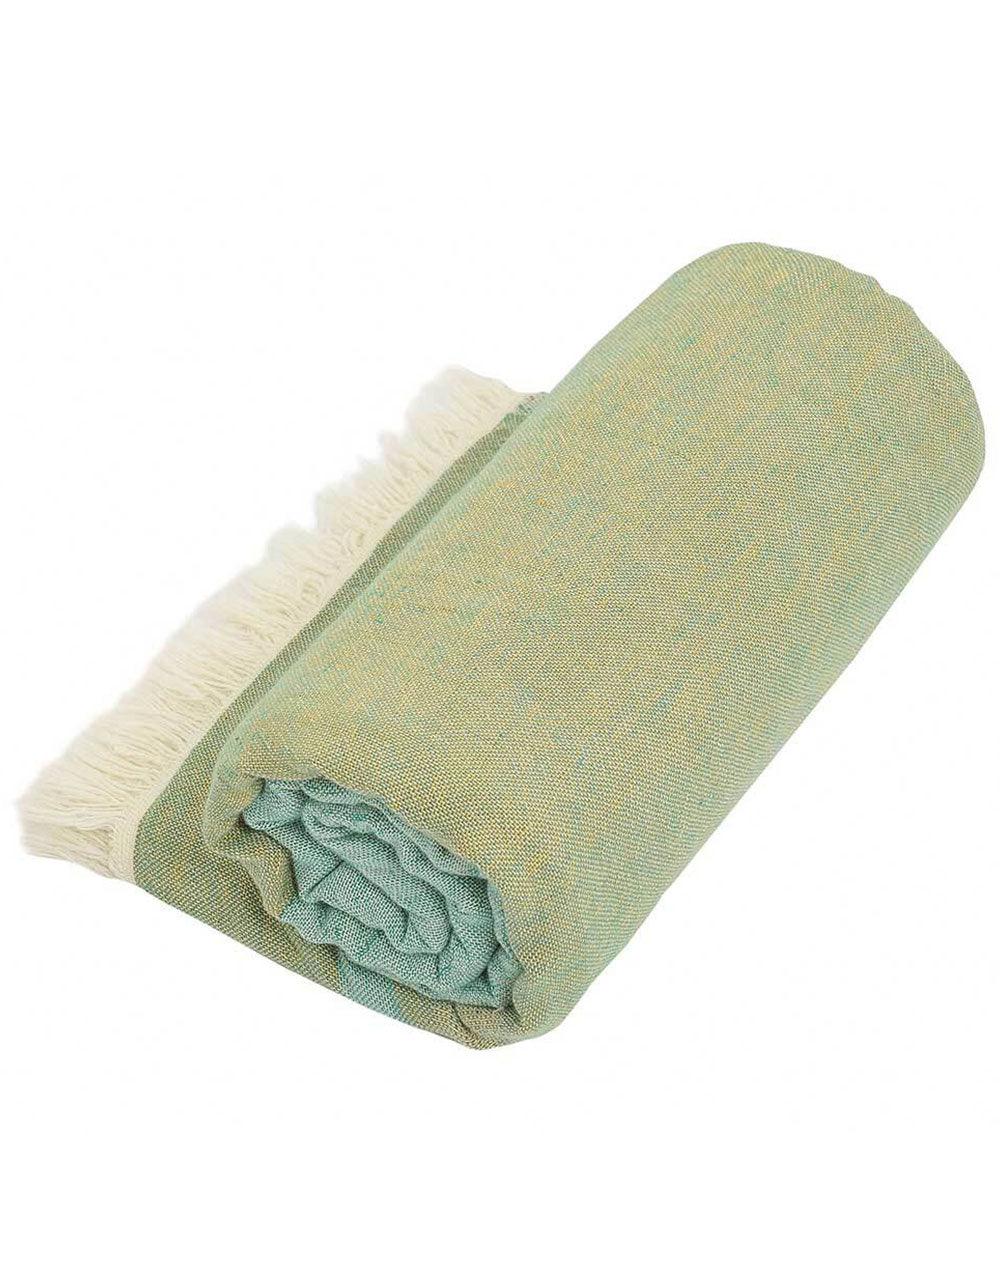 Cacala Luxury Bath Towel Actic Pool Series 36x71 100% Cotton